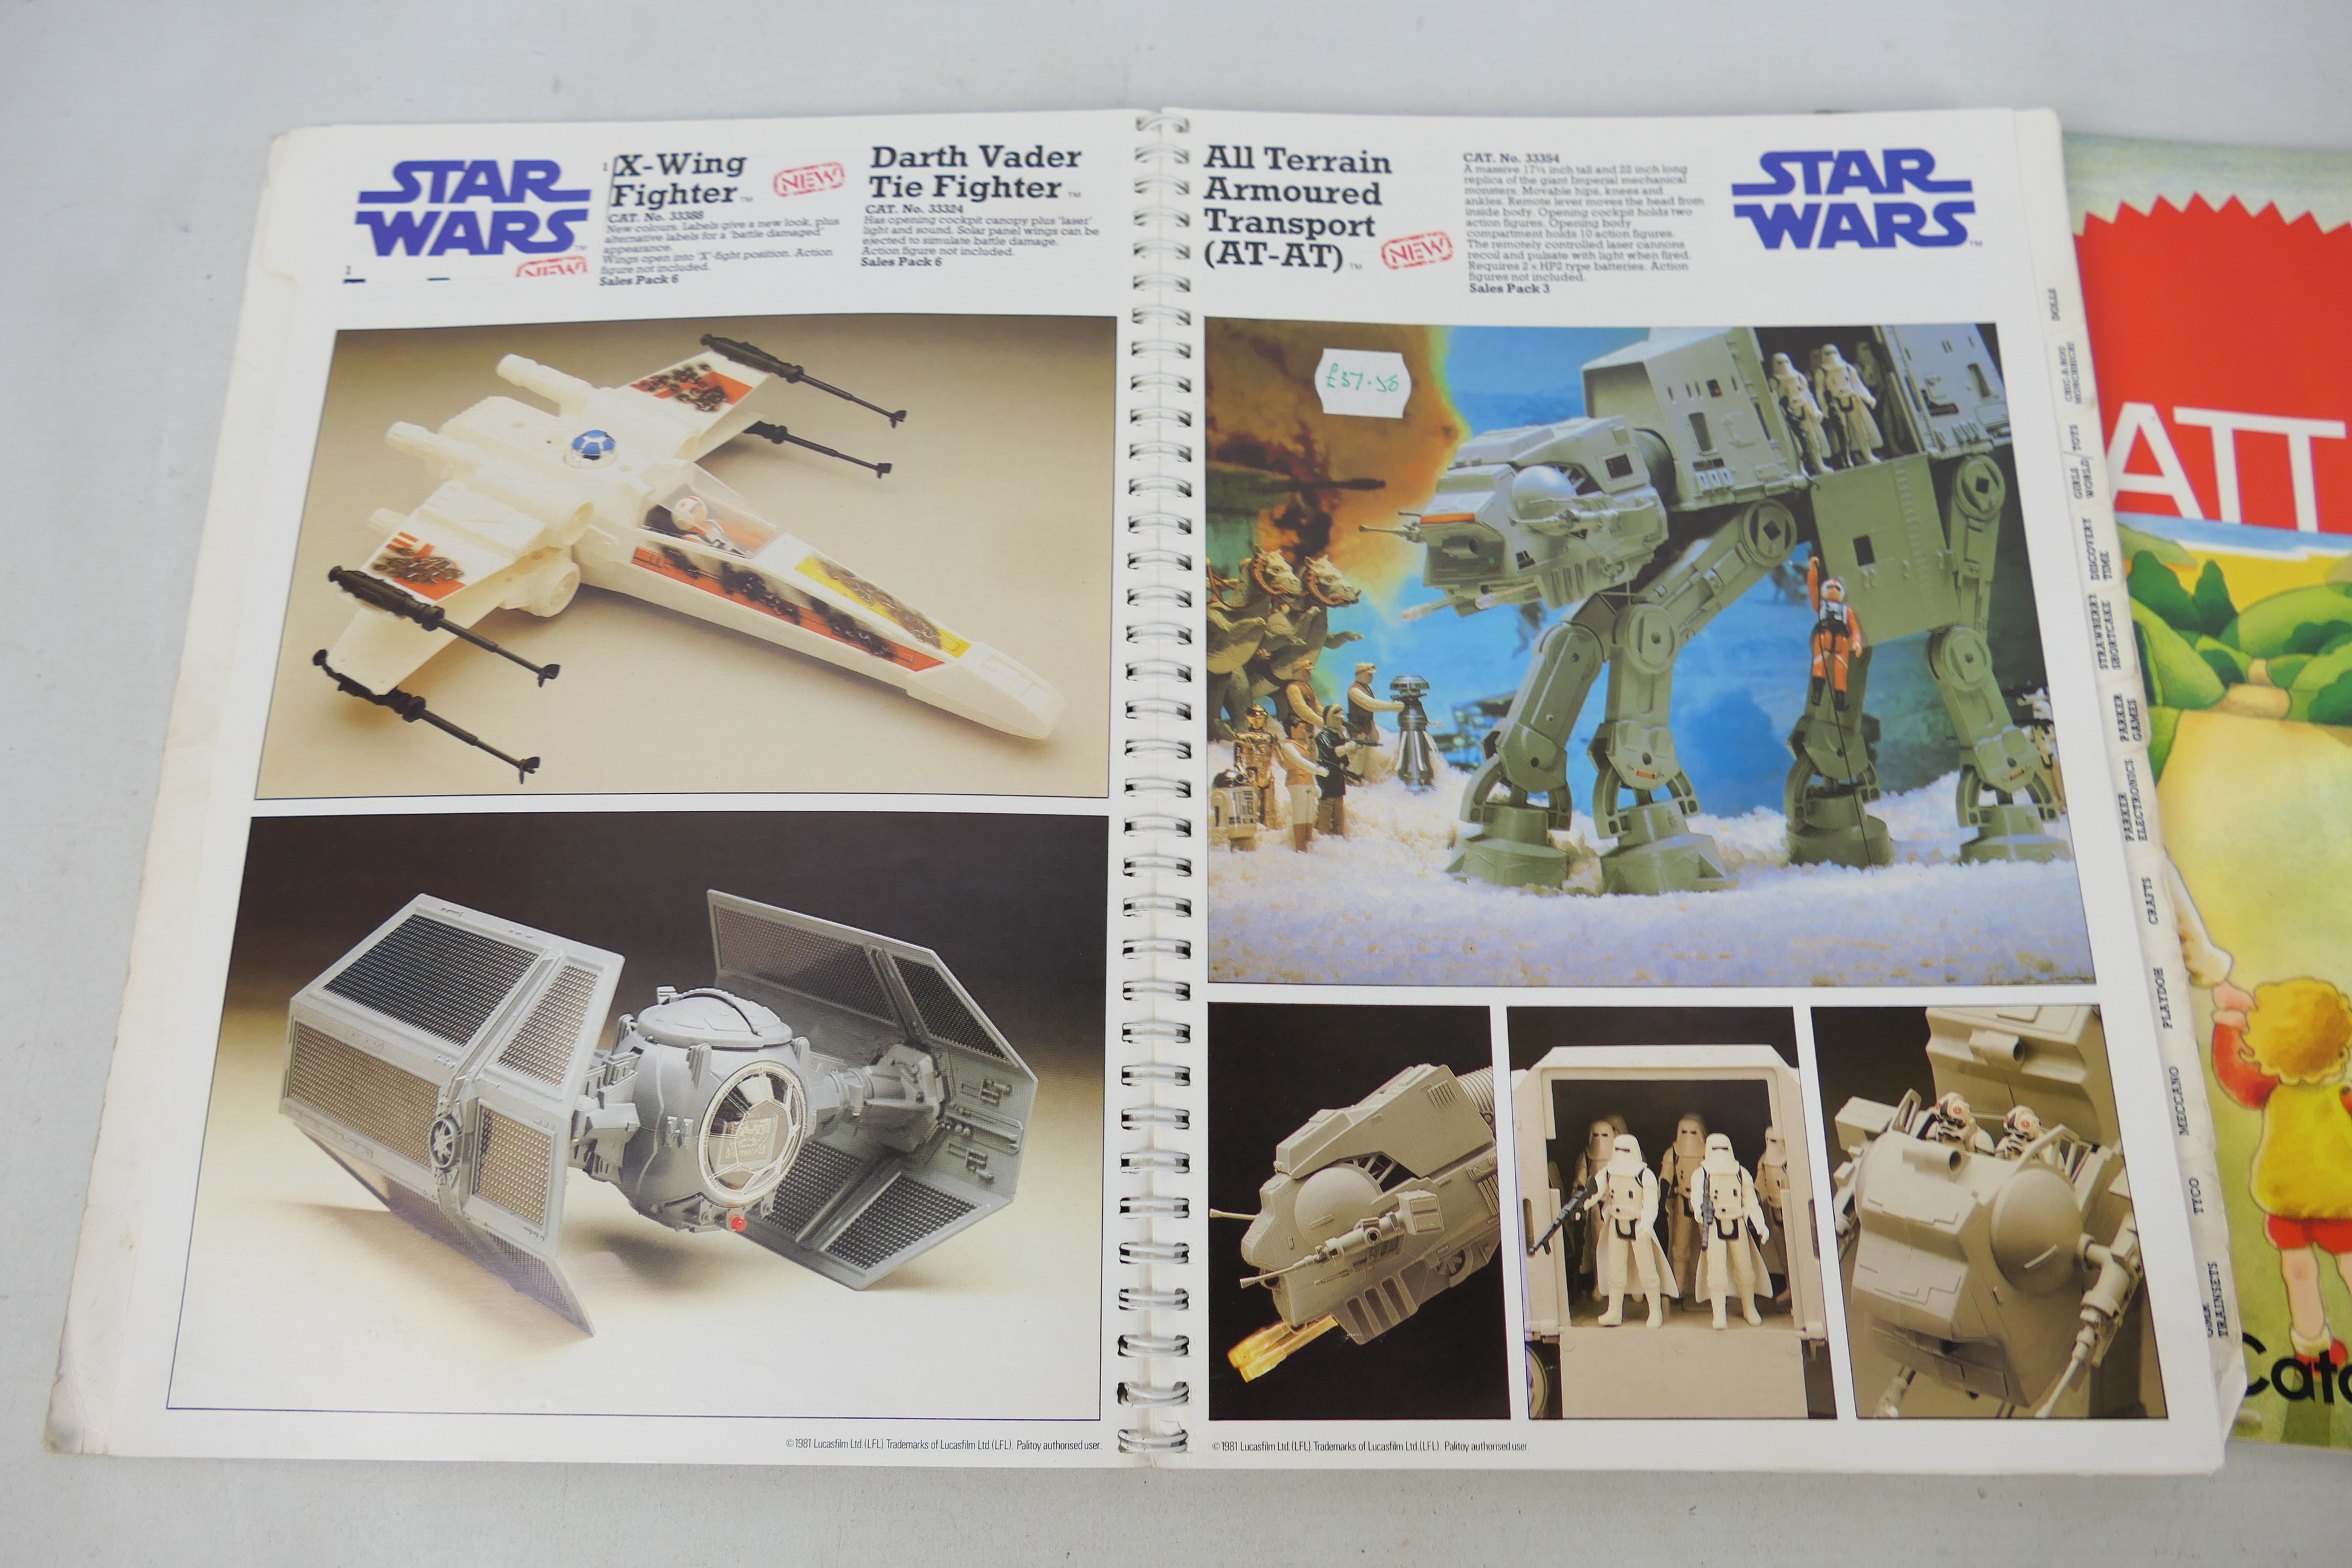 Palitoy - Action Man - Star Wars - Mattel - 2 rare trade catalogues, - Image 2 of 5